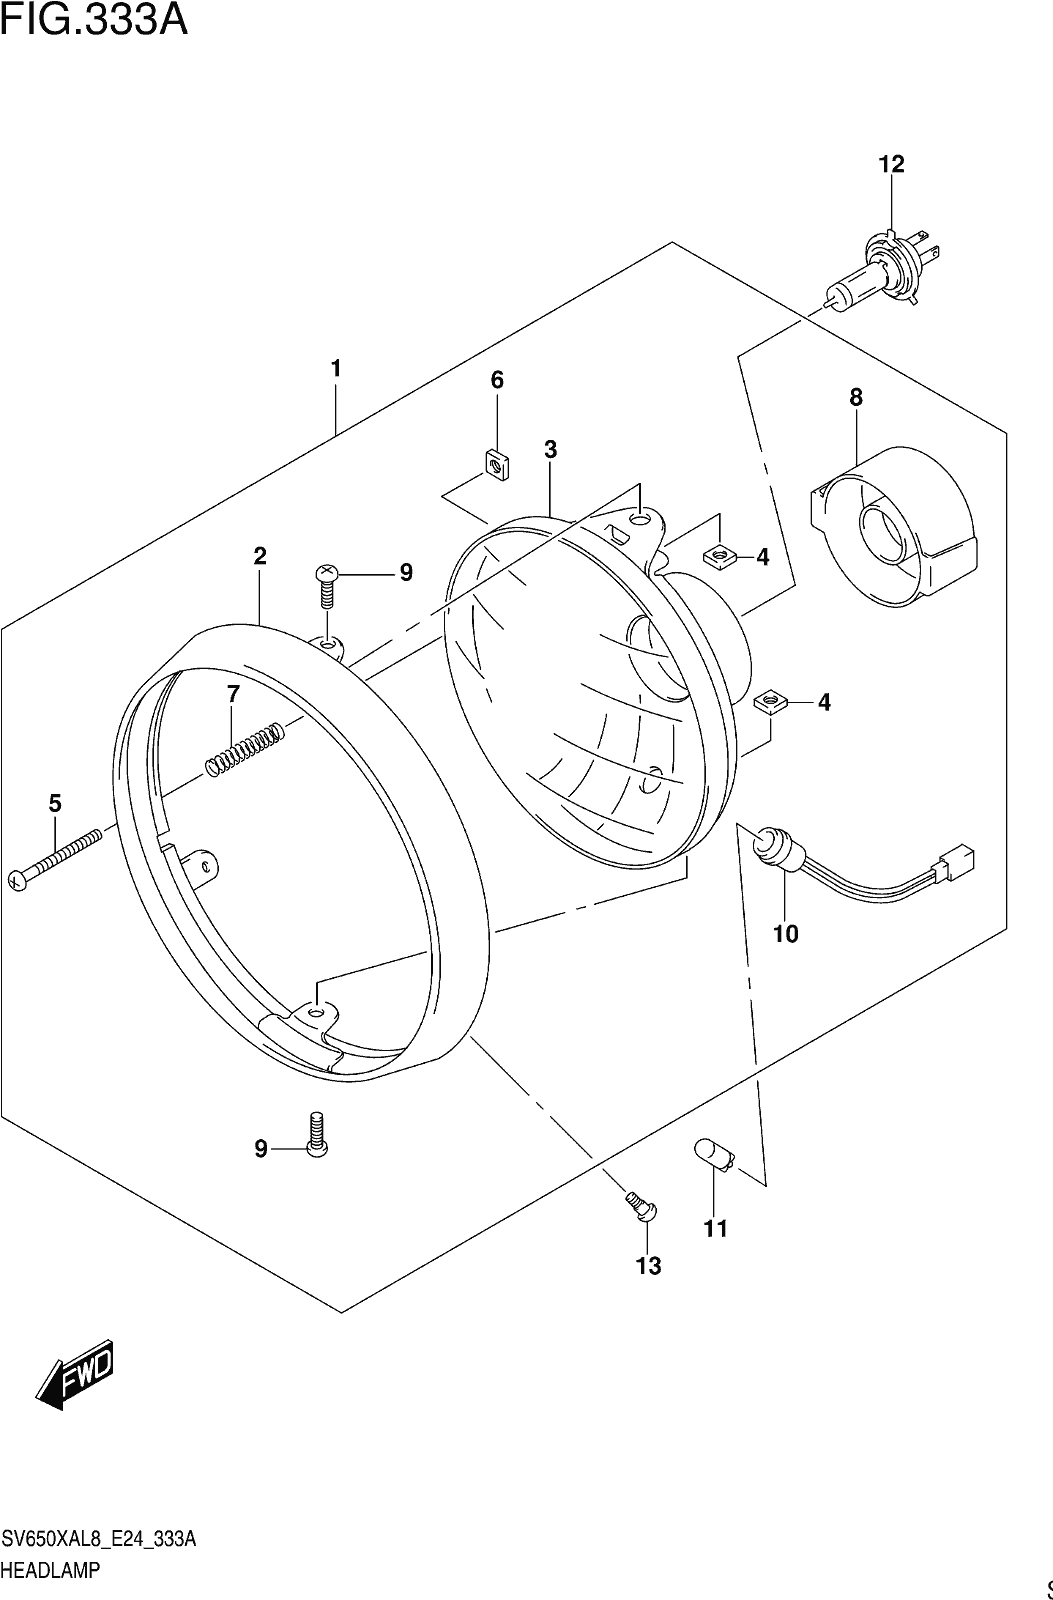 Fig.333a Headlamp